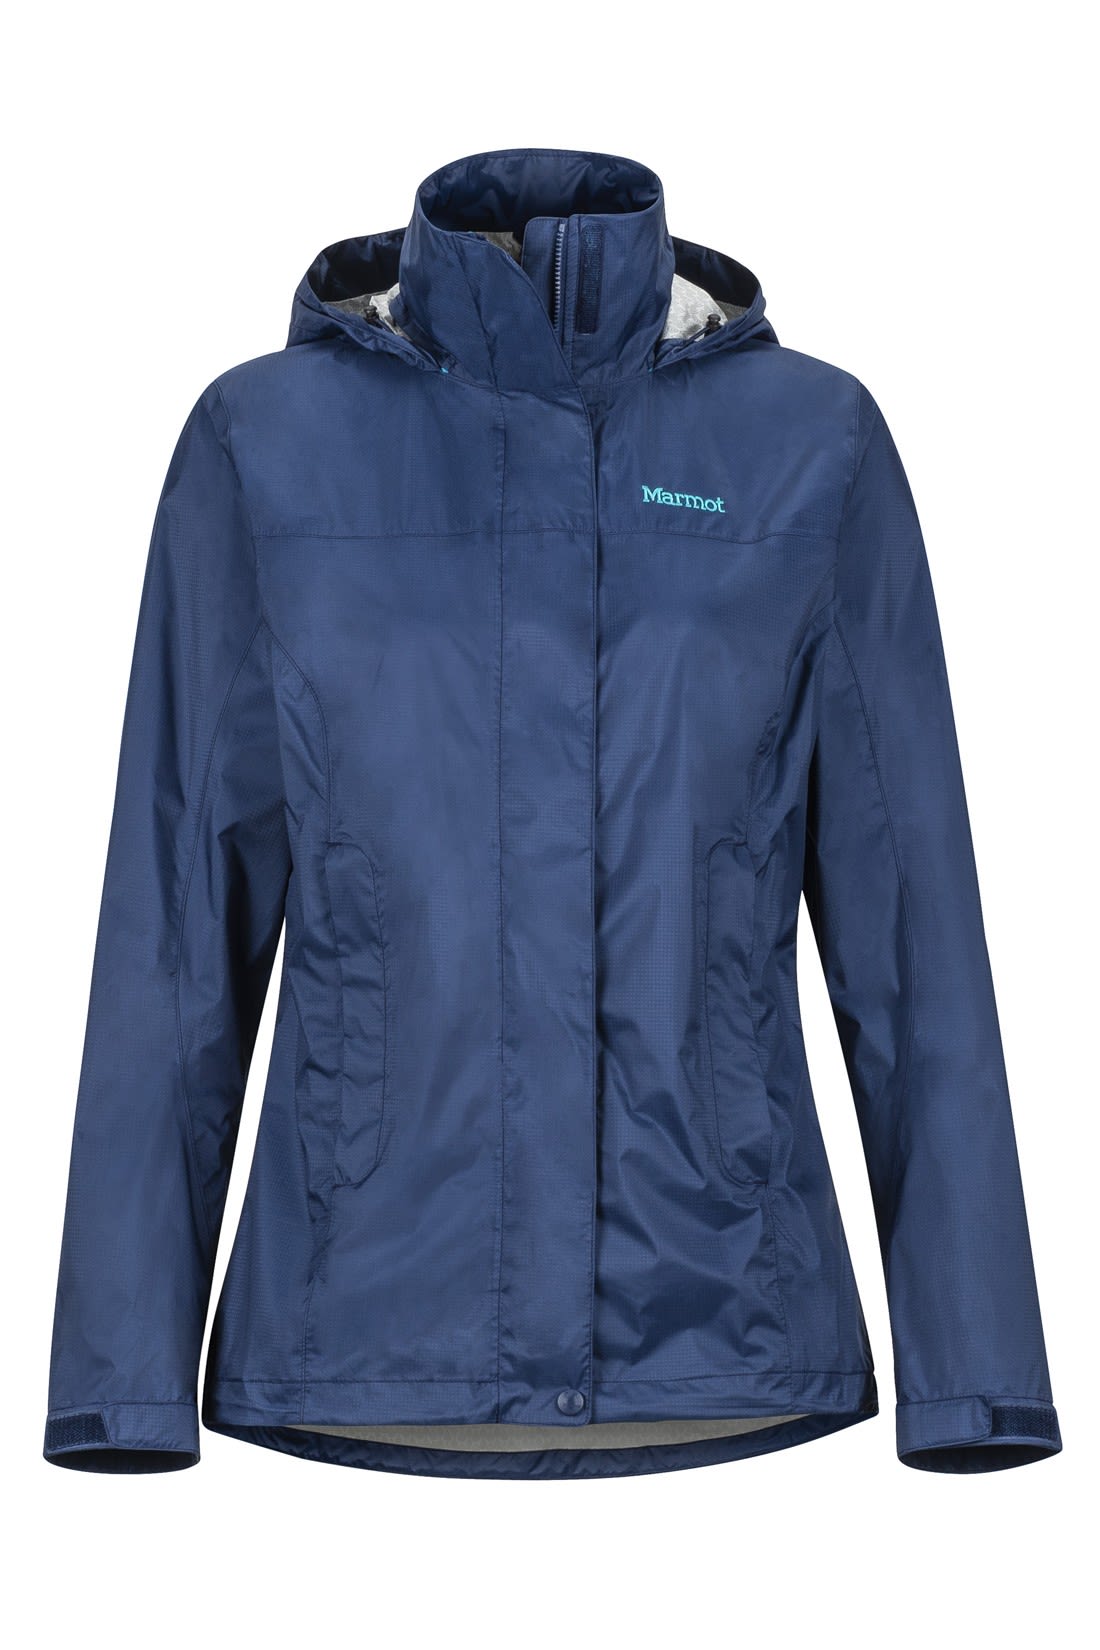 Marmot Precip ECO Jacket Blau- Female Ponchos und Capes- Grsse XS - Farbe Arctic Navy